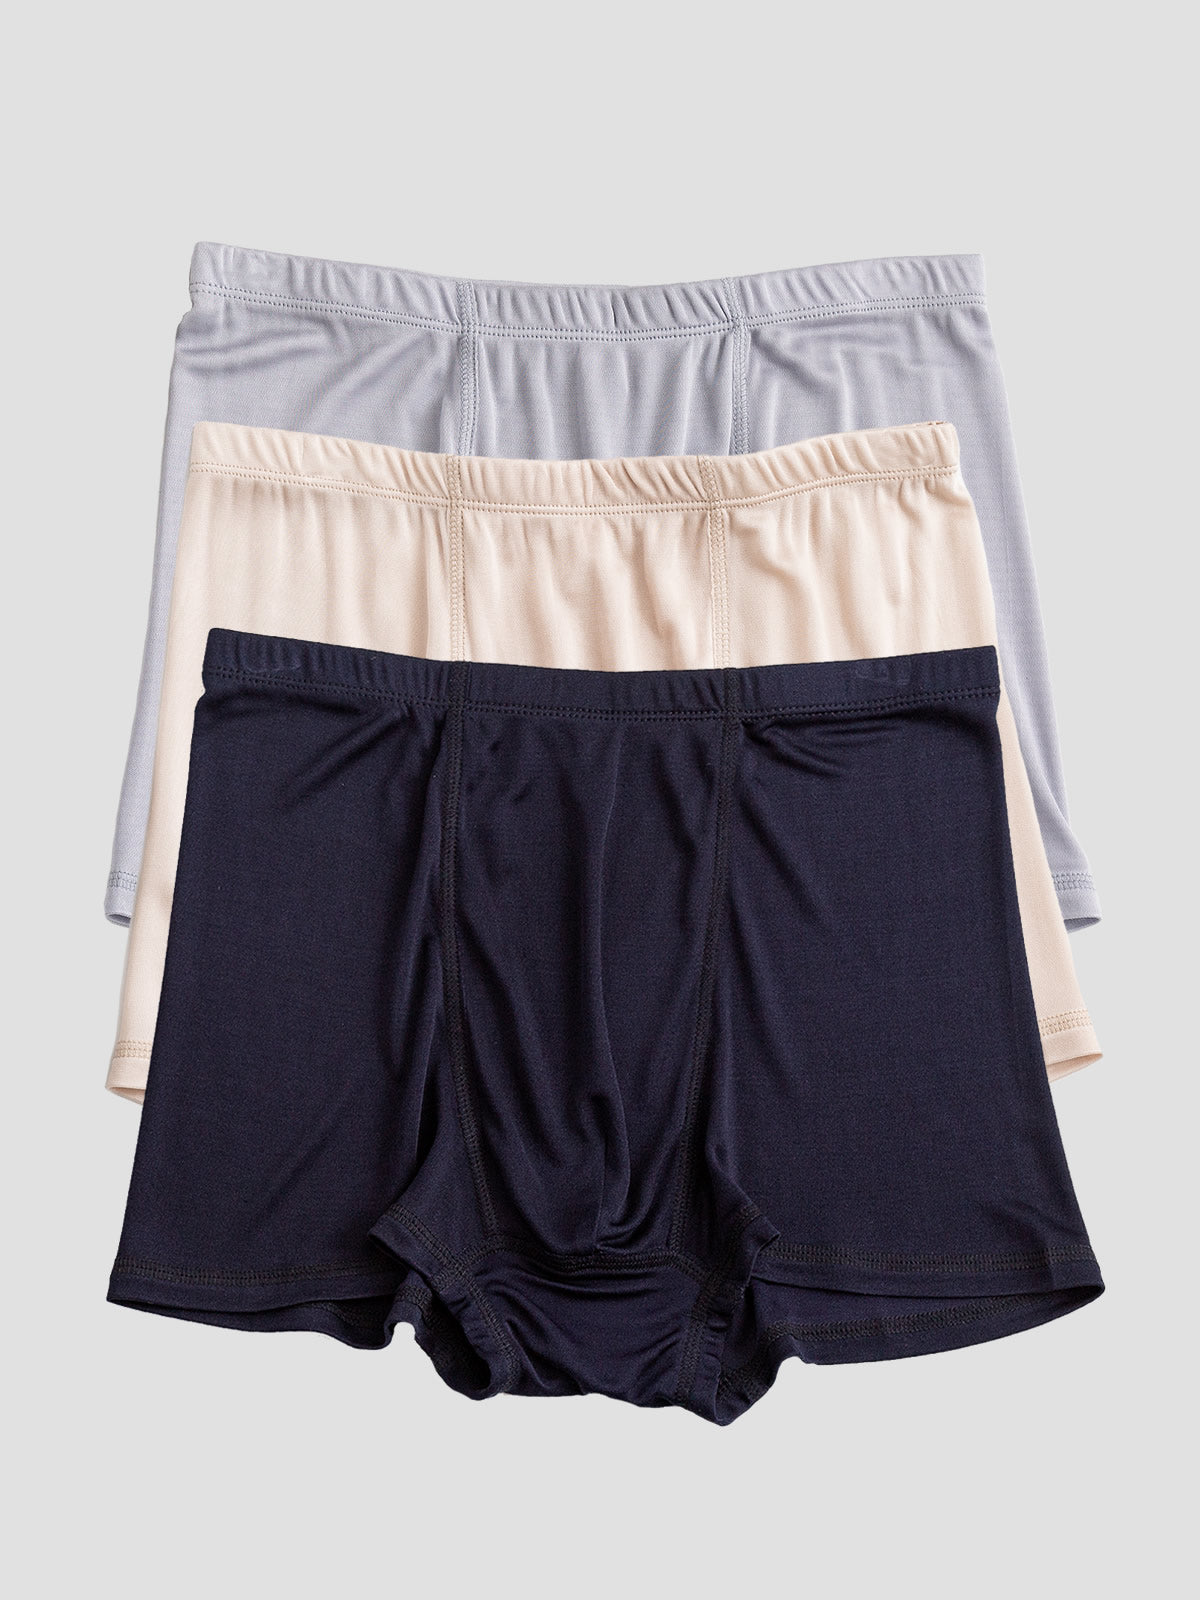 1/3Pcs Sexy Men's Dollar Printed Underwear Shorts Briefs Cotton Boxer Sofe  Comfortable Underpants L/XL/XXL